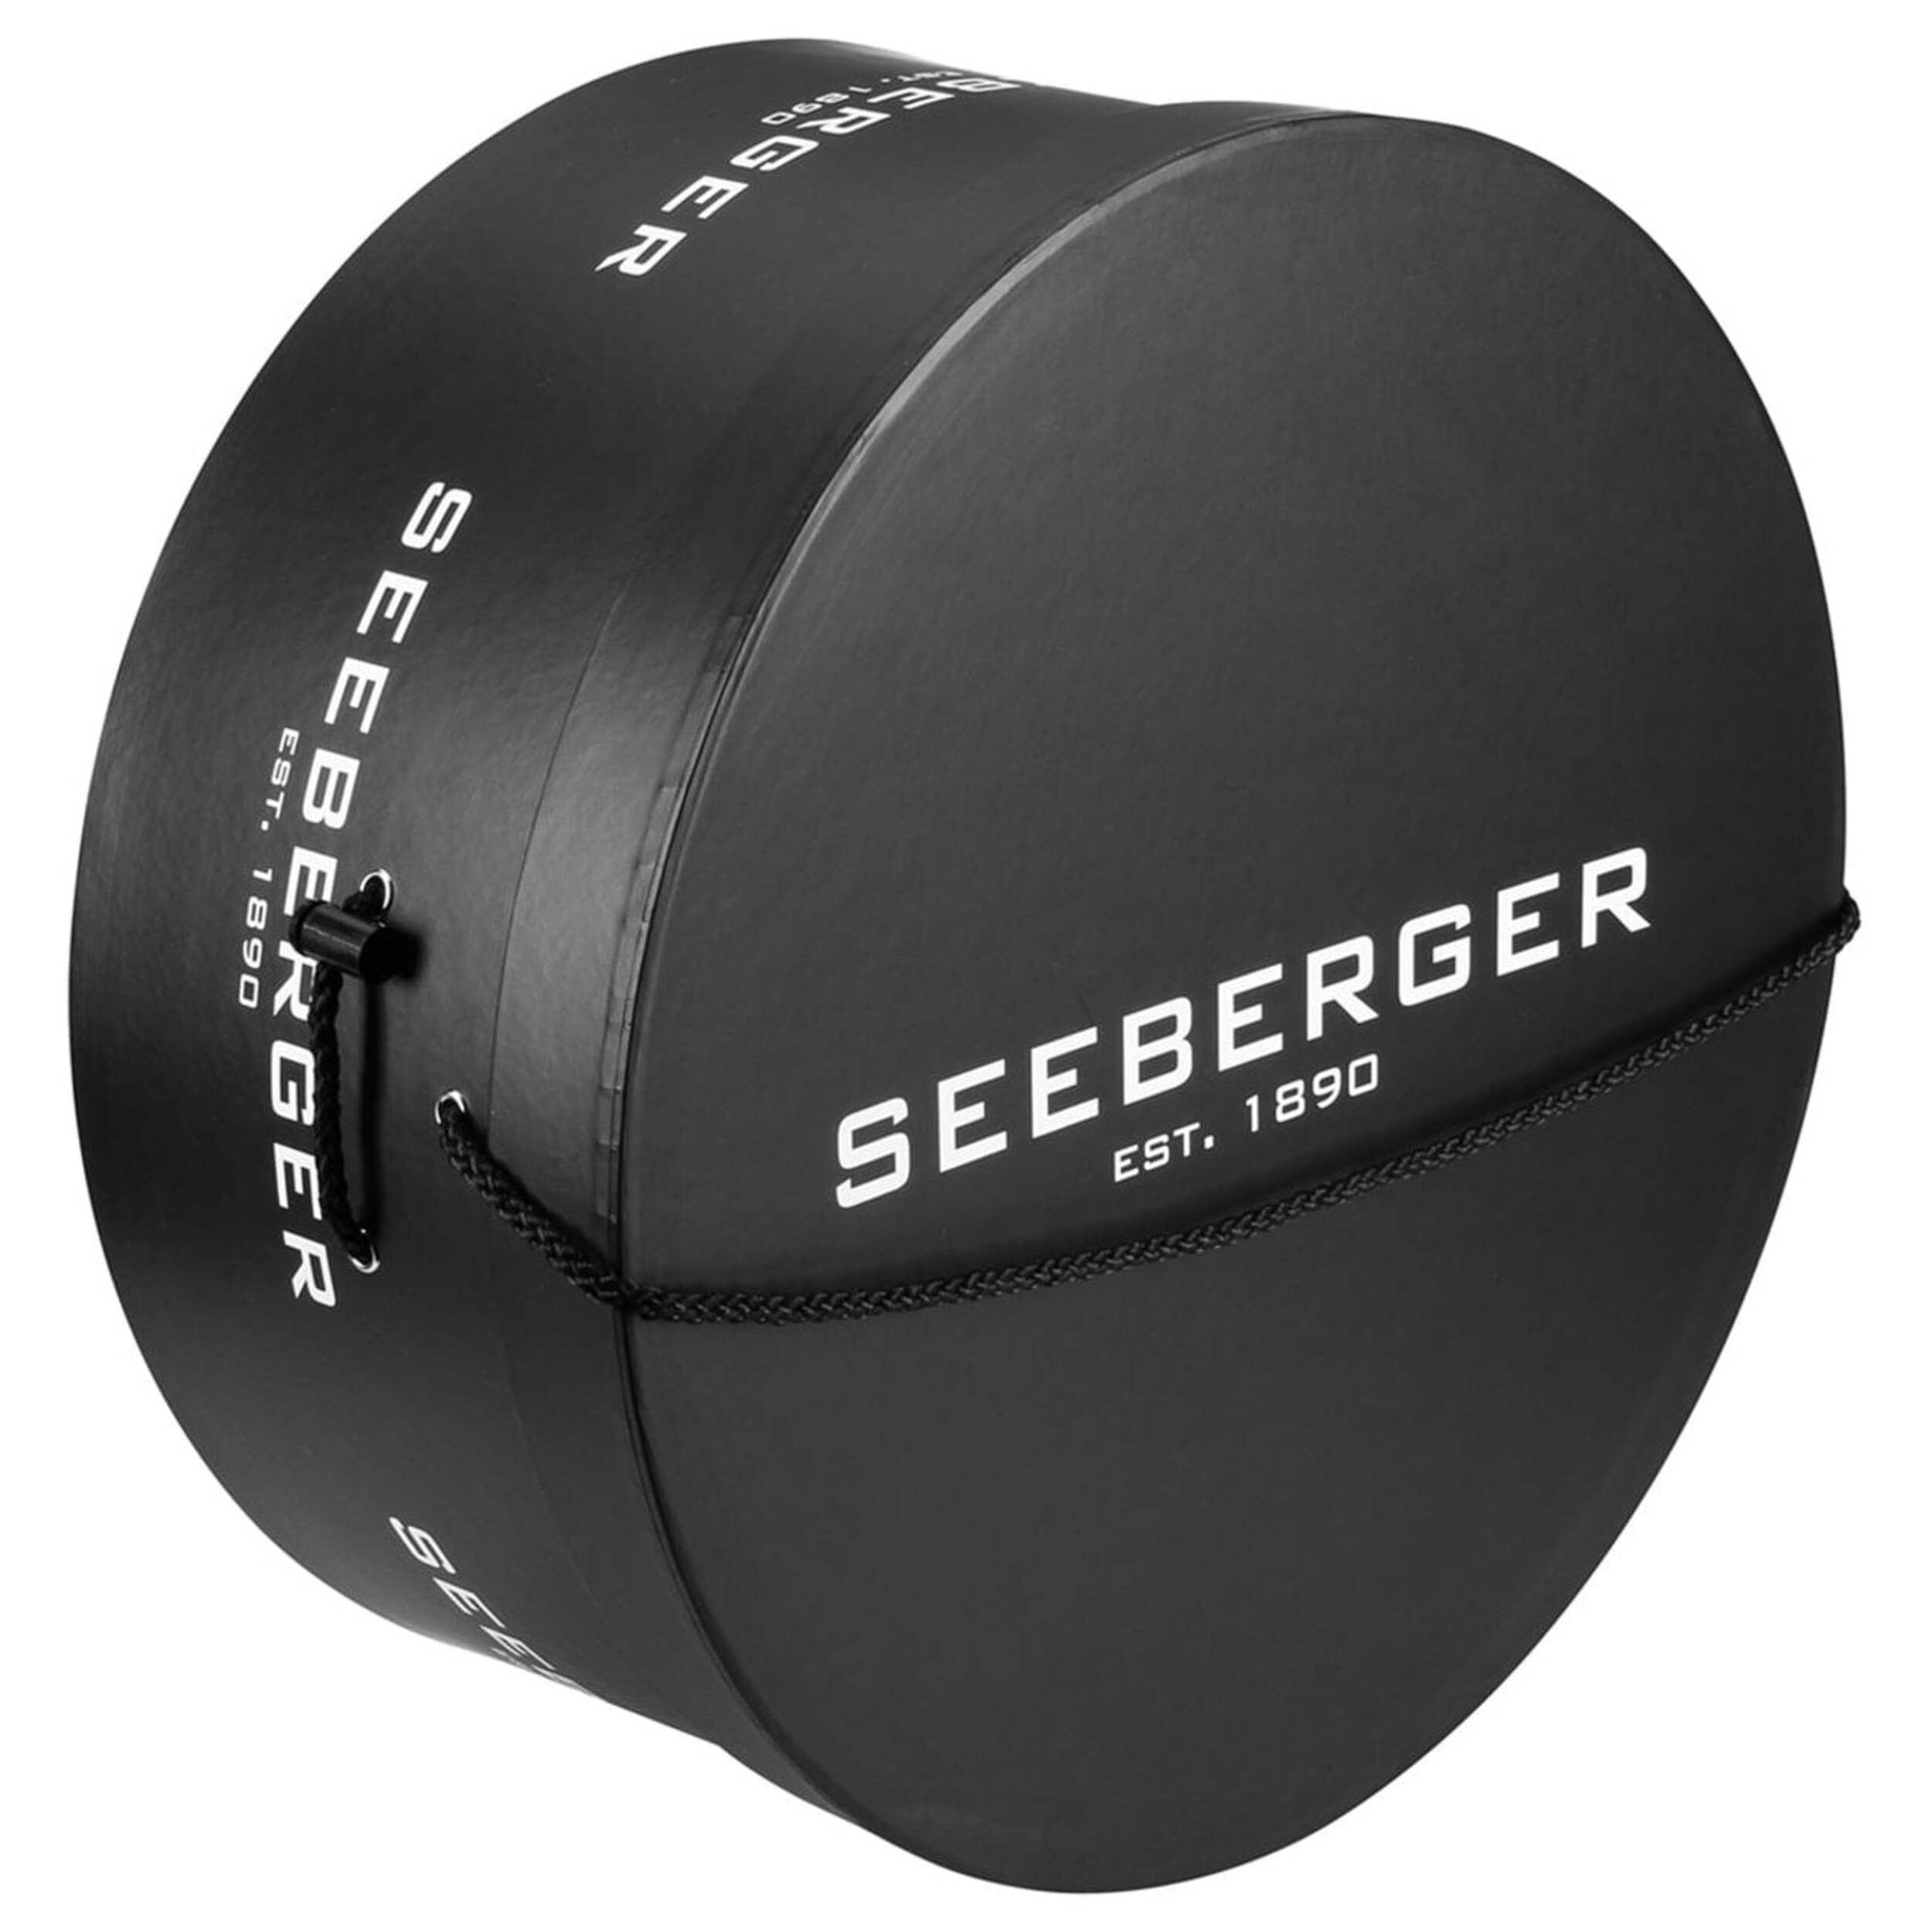 Caja para Sombrero 50 by Seeberger - 39,95 €